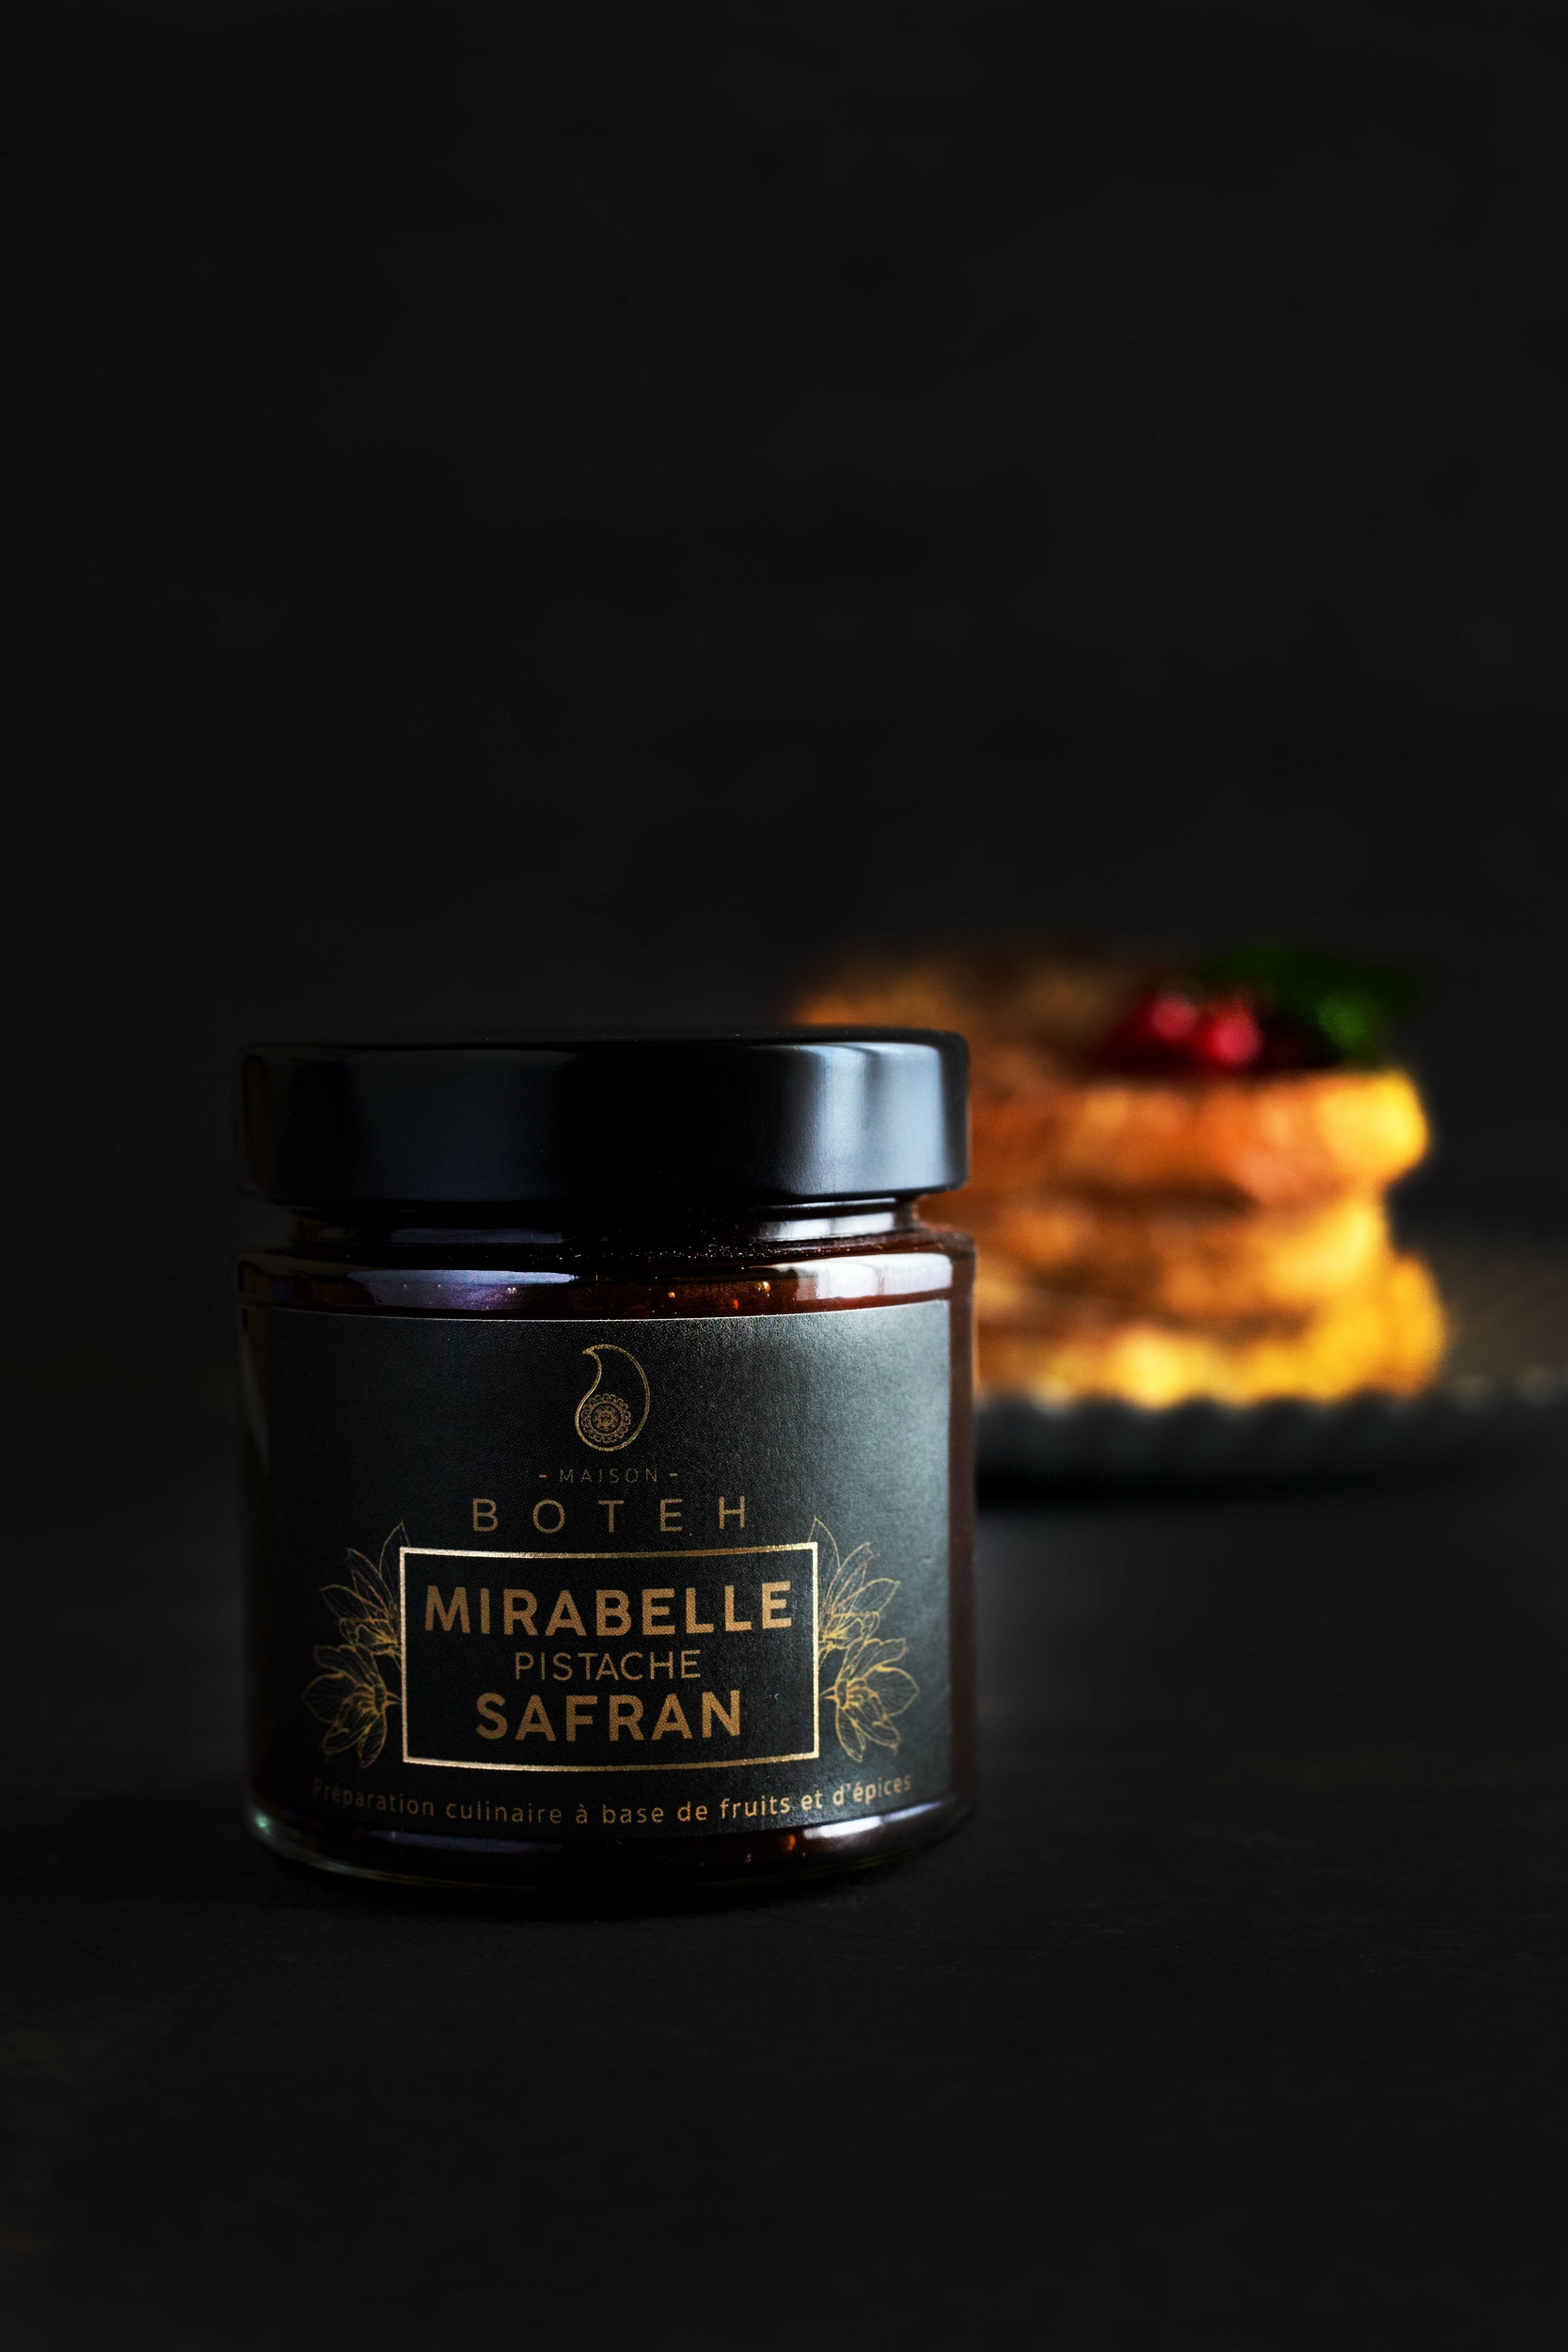 Mirabelle-pistache-safran- Maison BOTEH